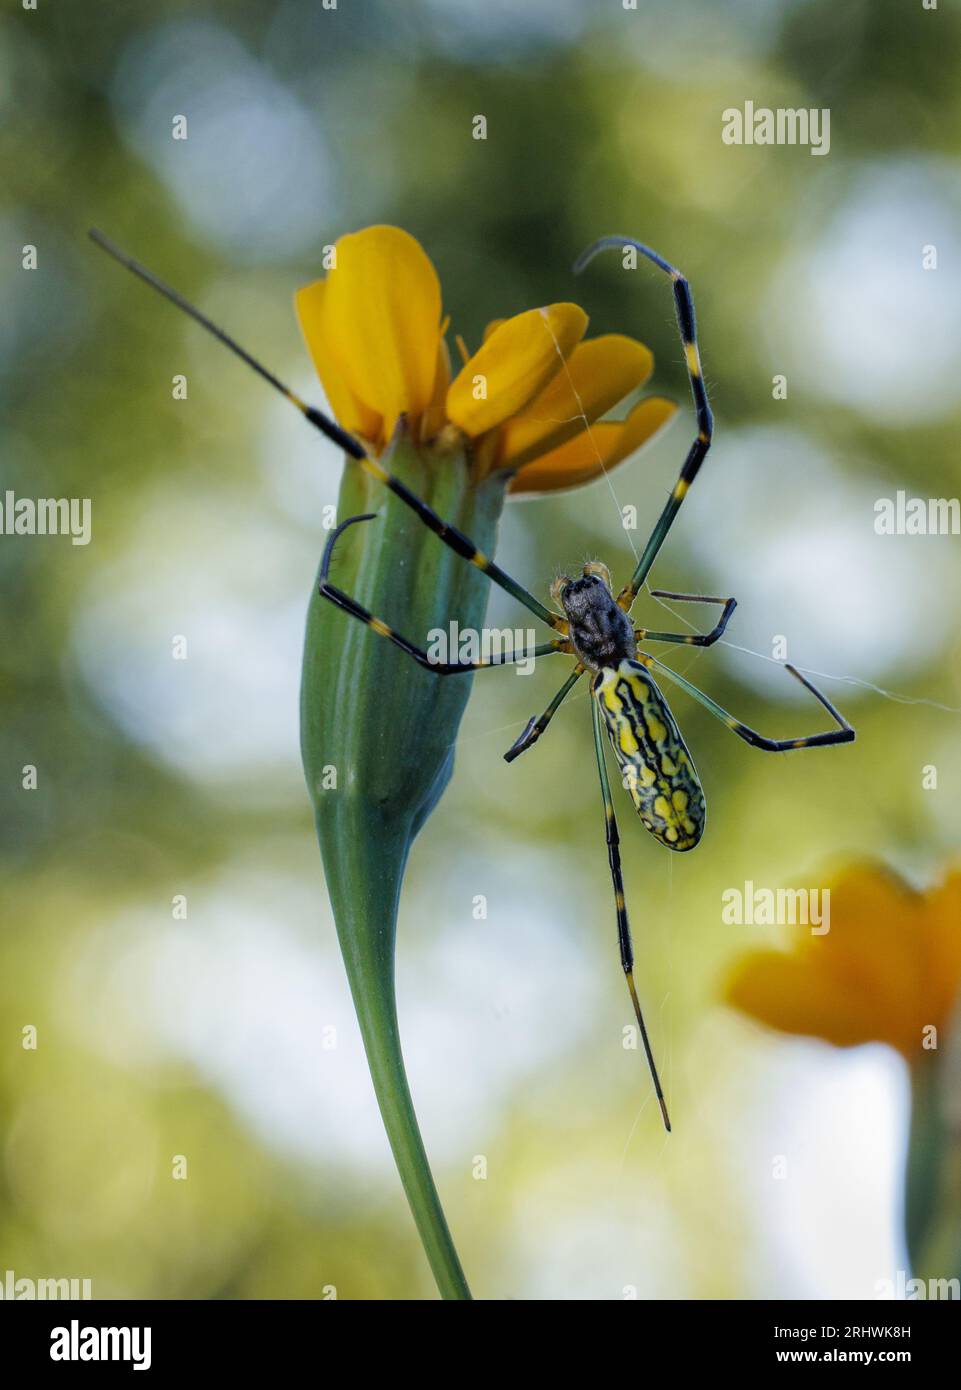 Joro spider (Trichonephila clavata) - Hall County, Georgia. A female joro spider constructs a web using the bloom of a marigold flower. Stock Photo